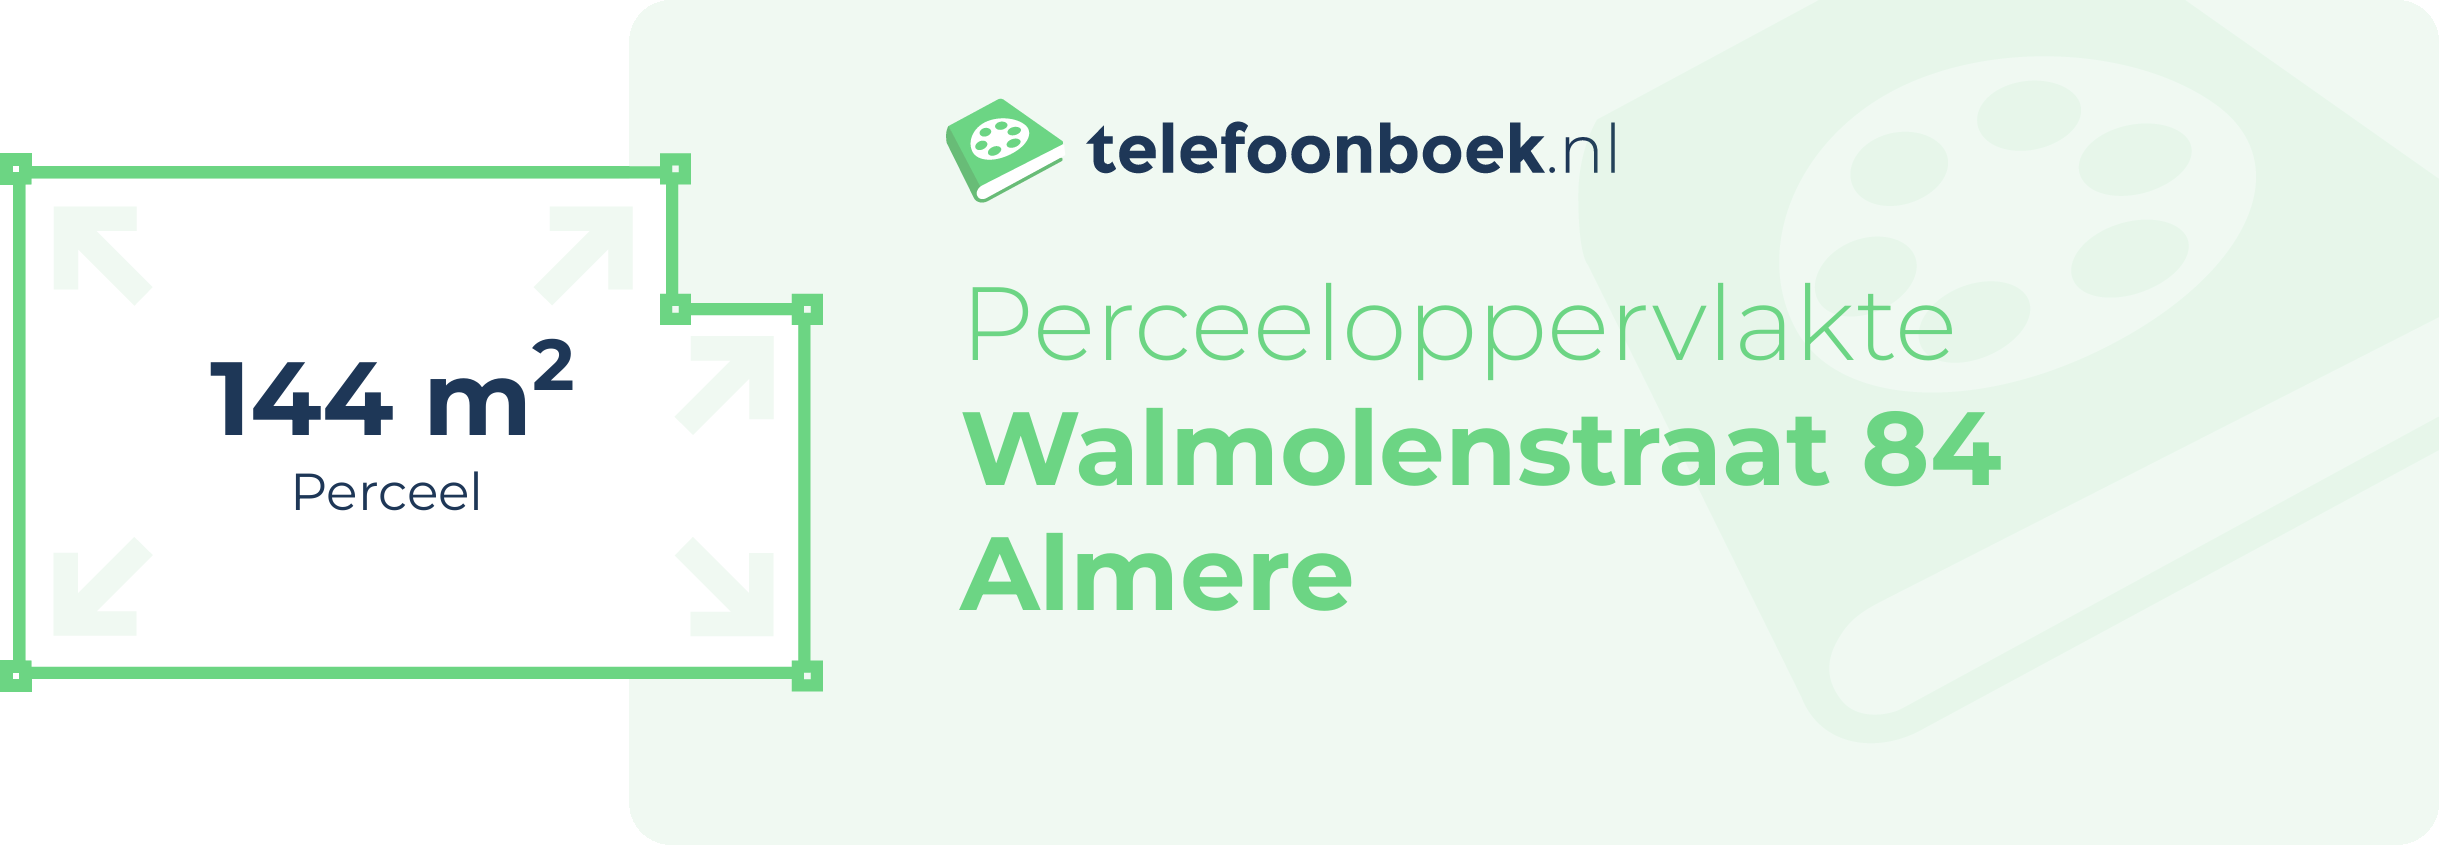 Perceeloppervlakte Walmolenstraat 84 Almere